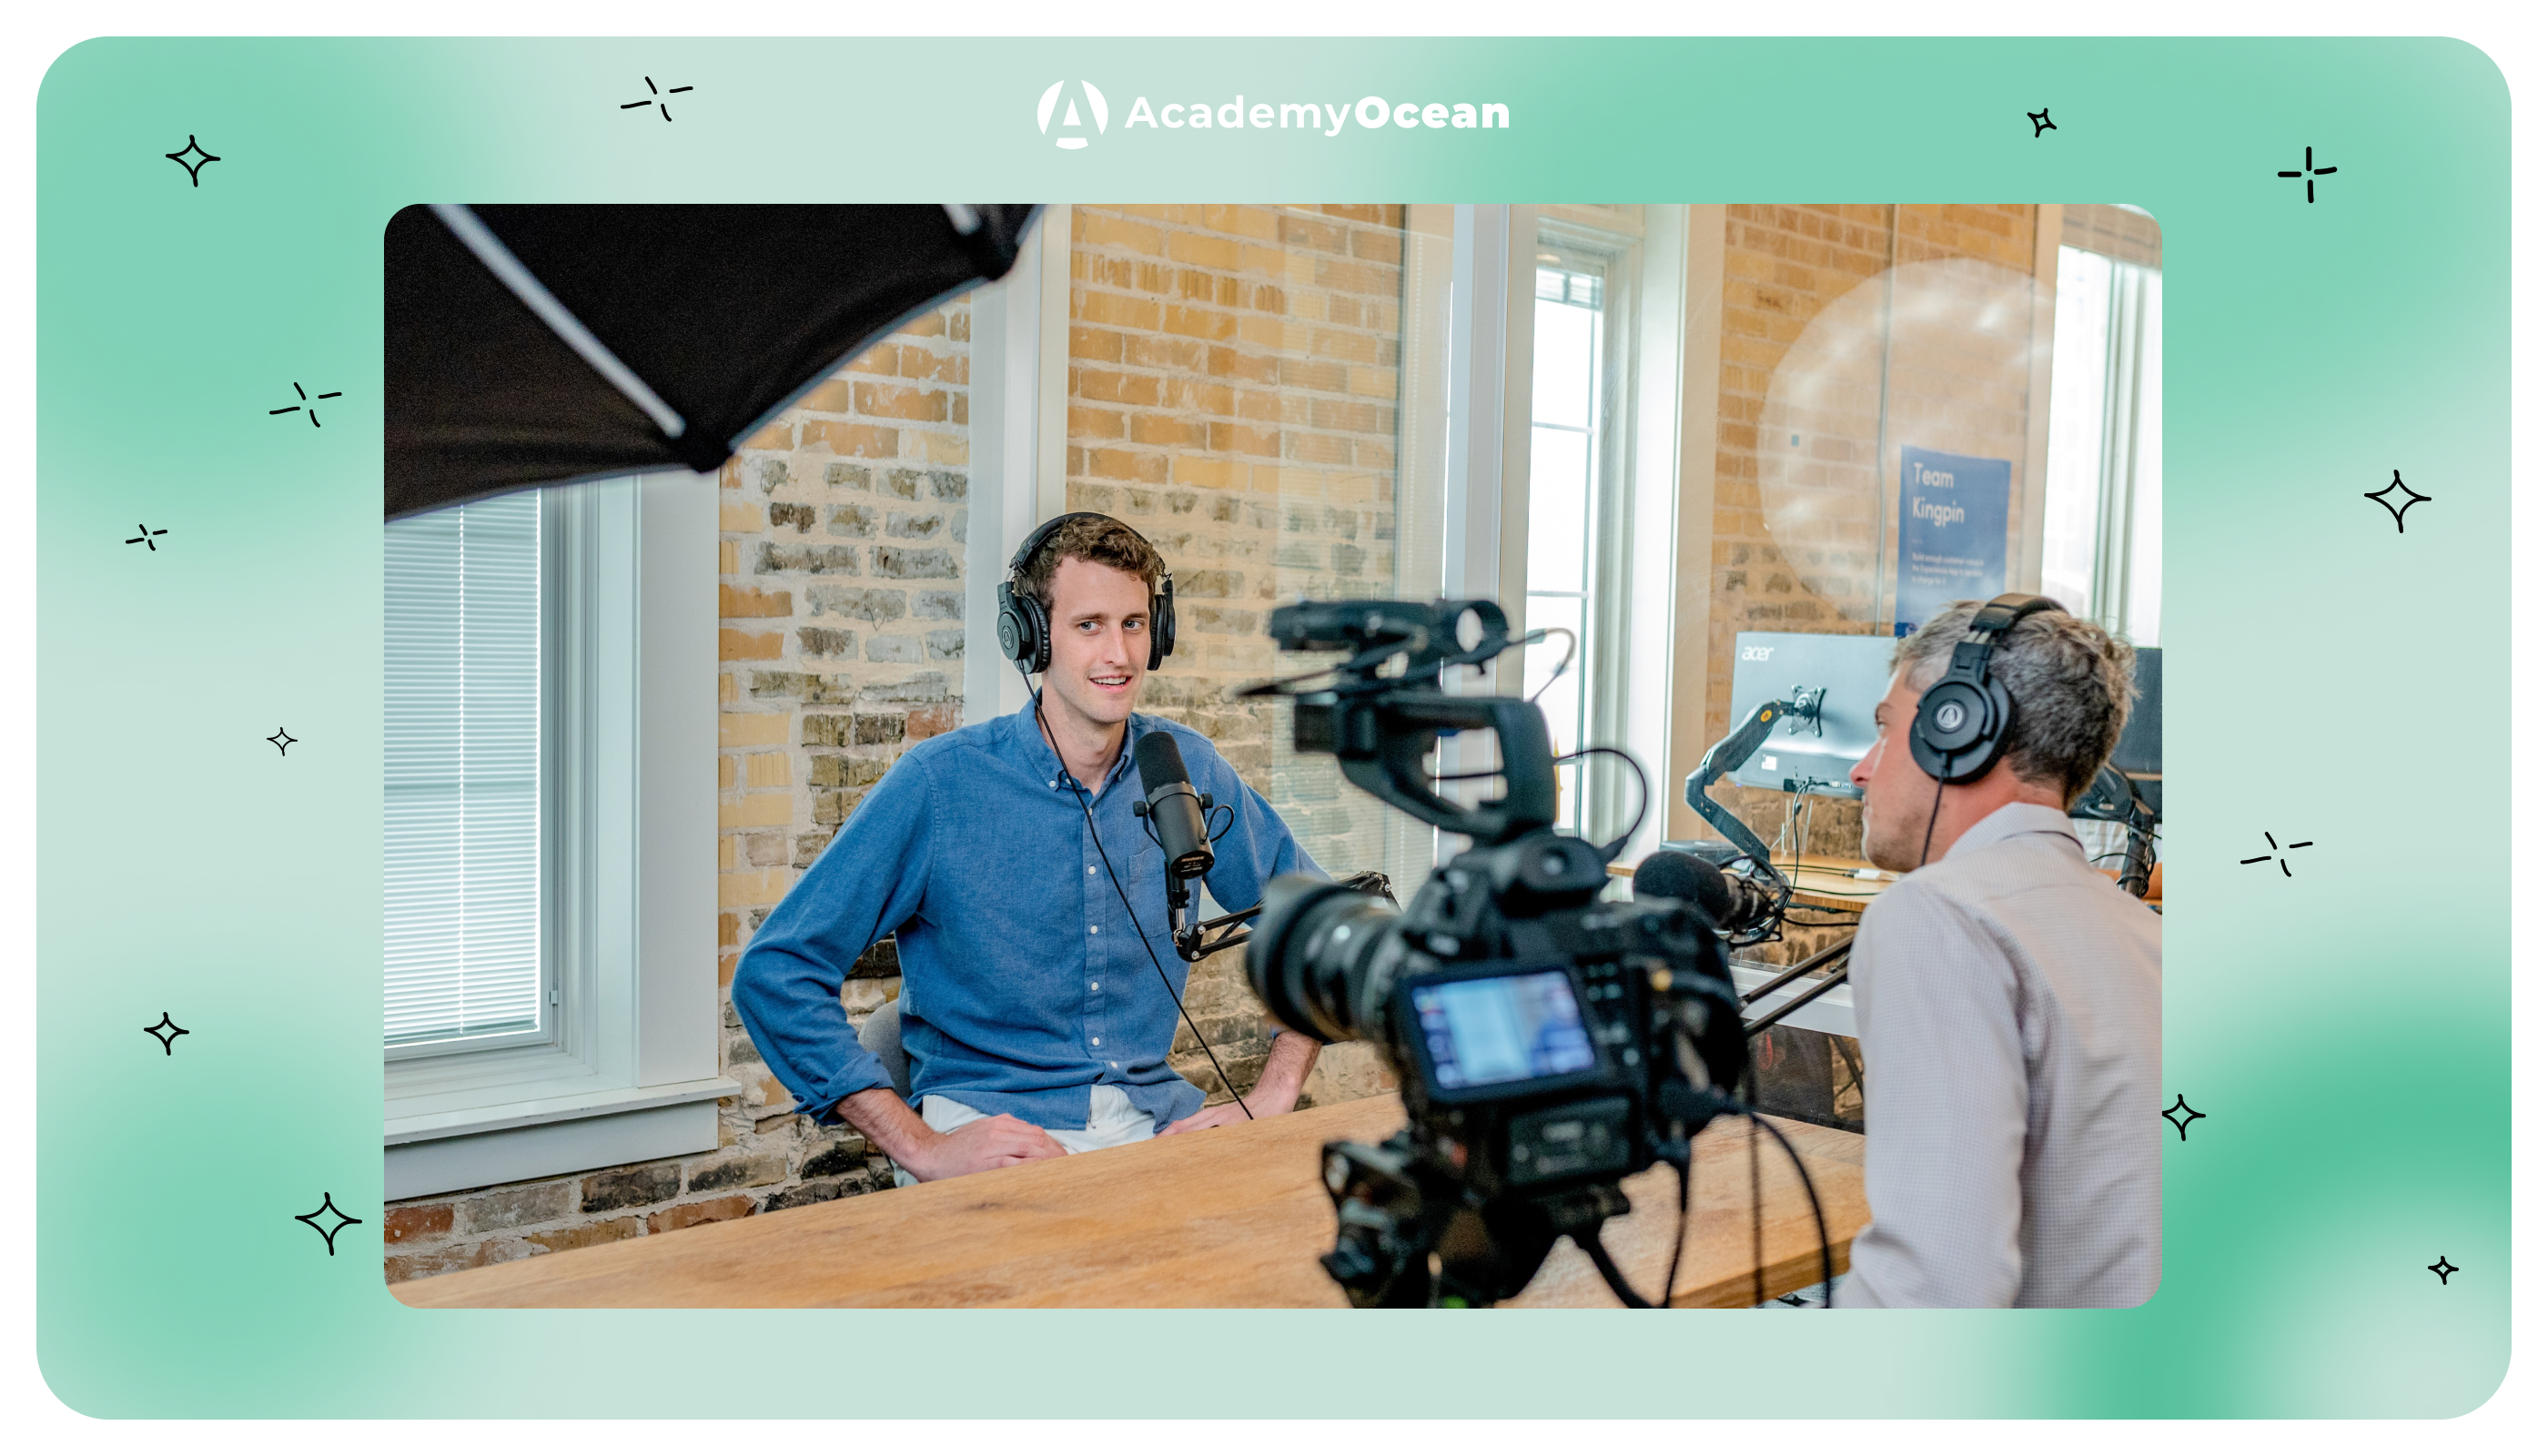 academyocean, youtube, vimeo, wistia, spotlightr, vidyard, видеохостинги, видеохостинги для LMS, обзор видеохостингов